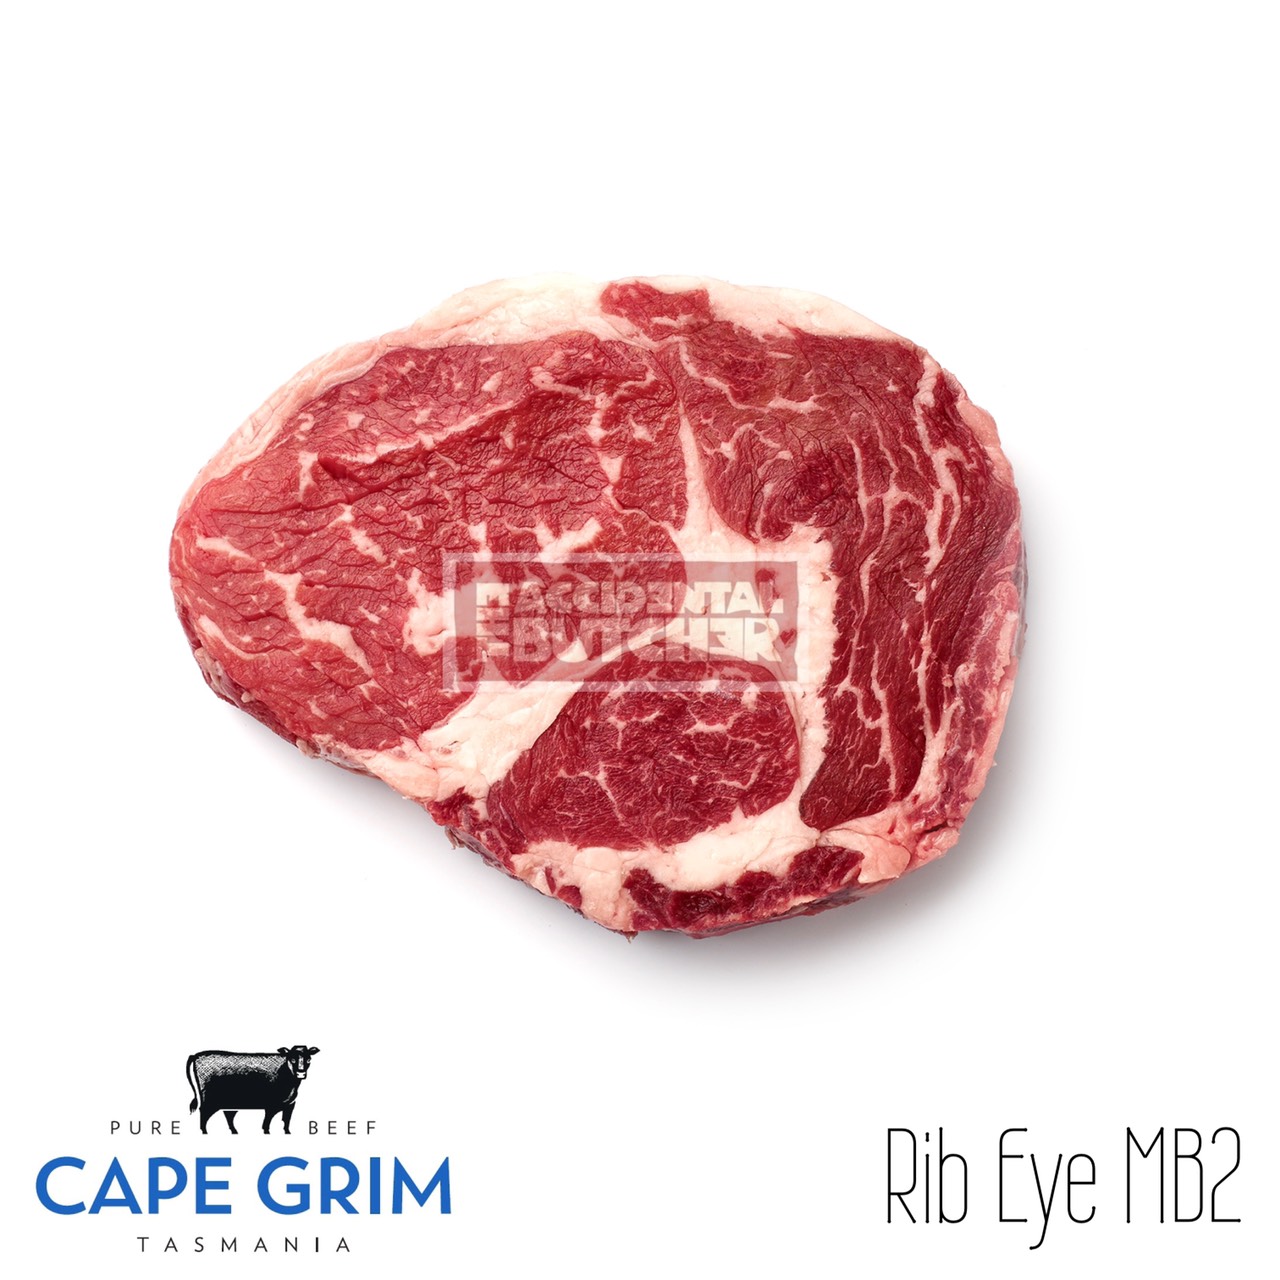 Cape Grim Rib Eye MB2